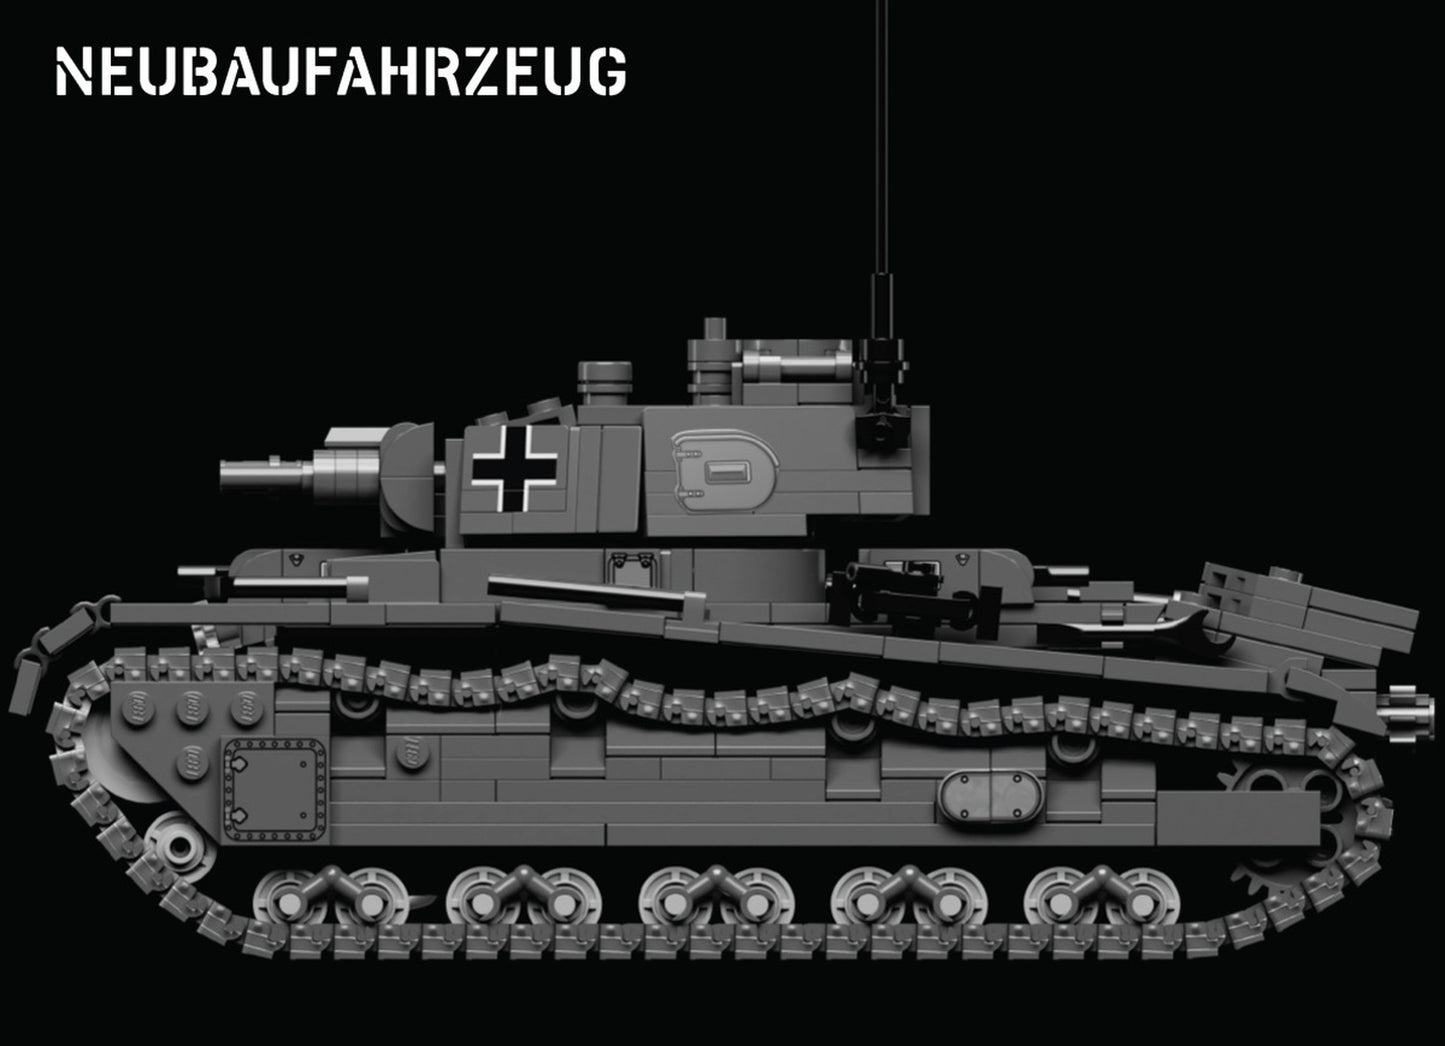 Neubaufahrzeug – German Medium Tank